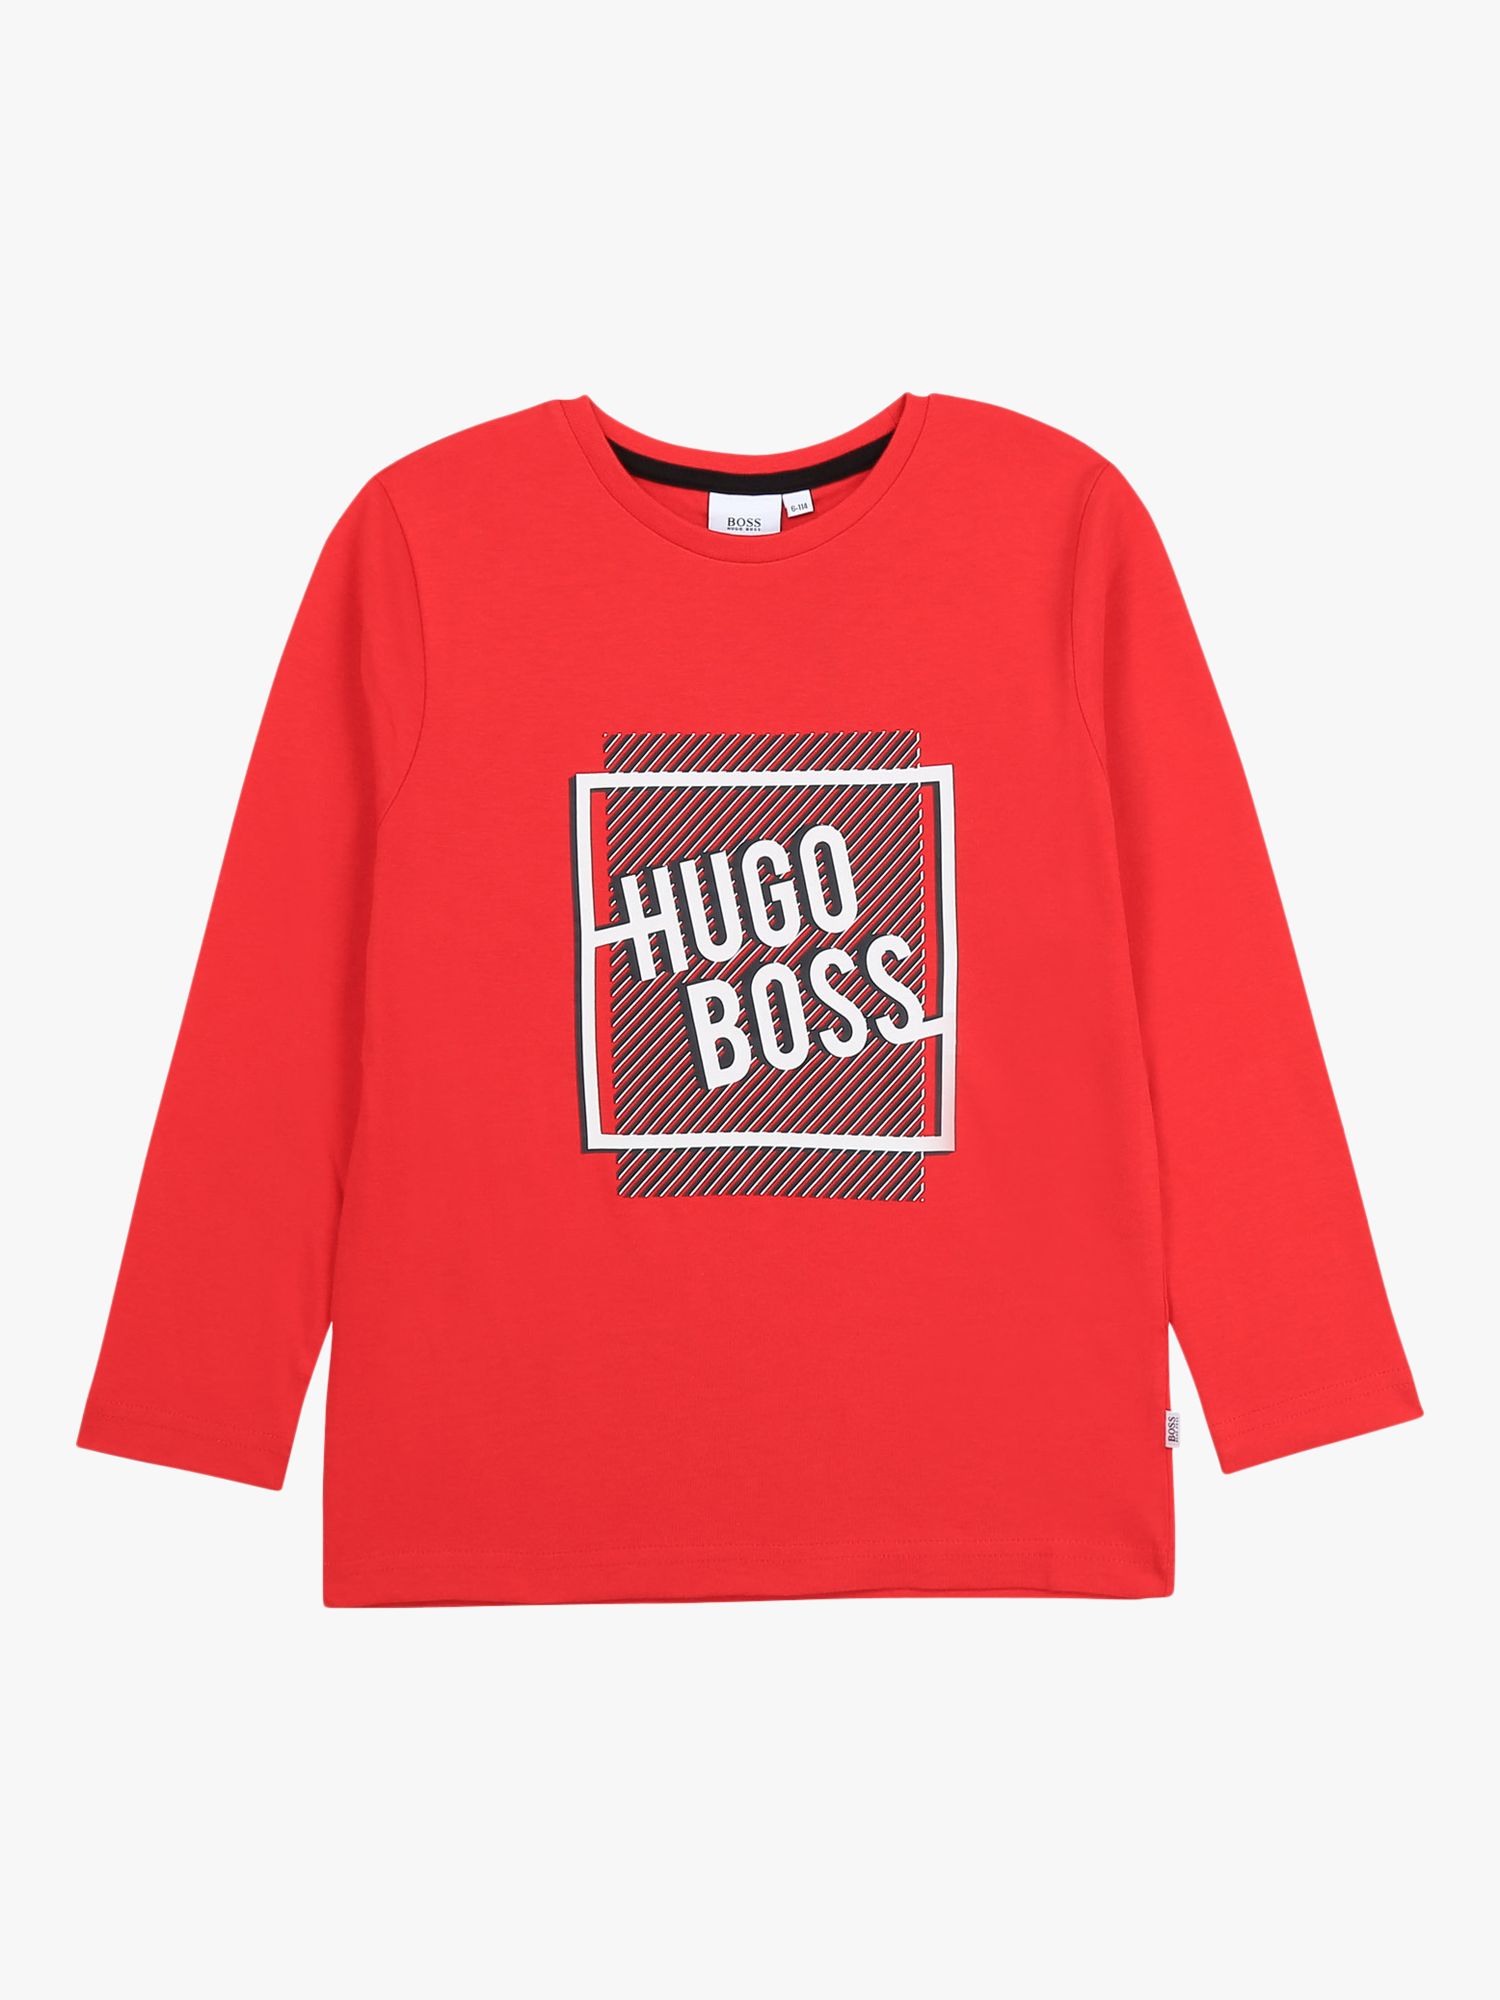 HUGO BOSS Boys' Logo Jersey Top, Poppy